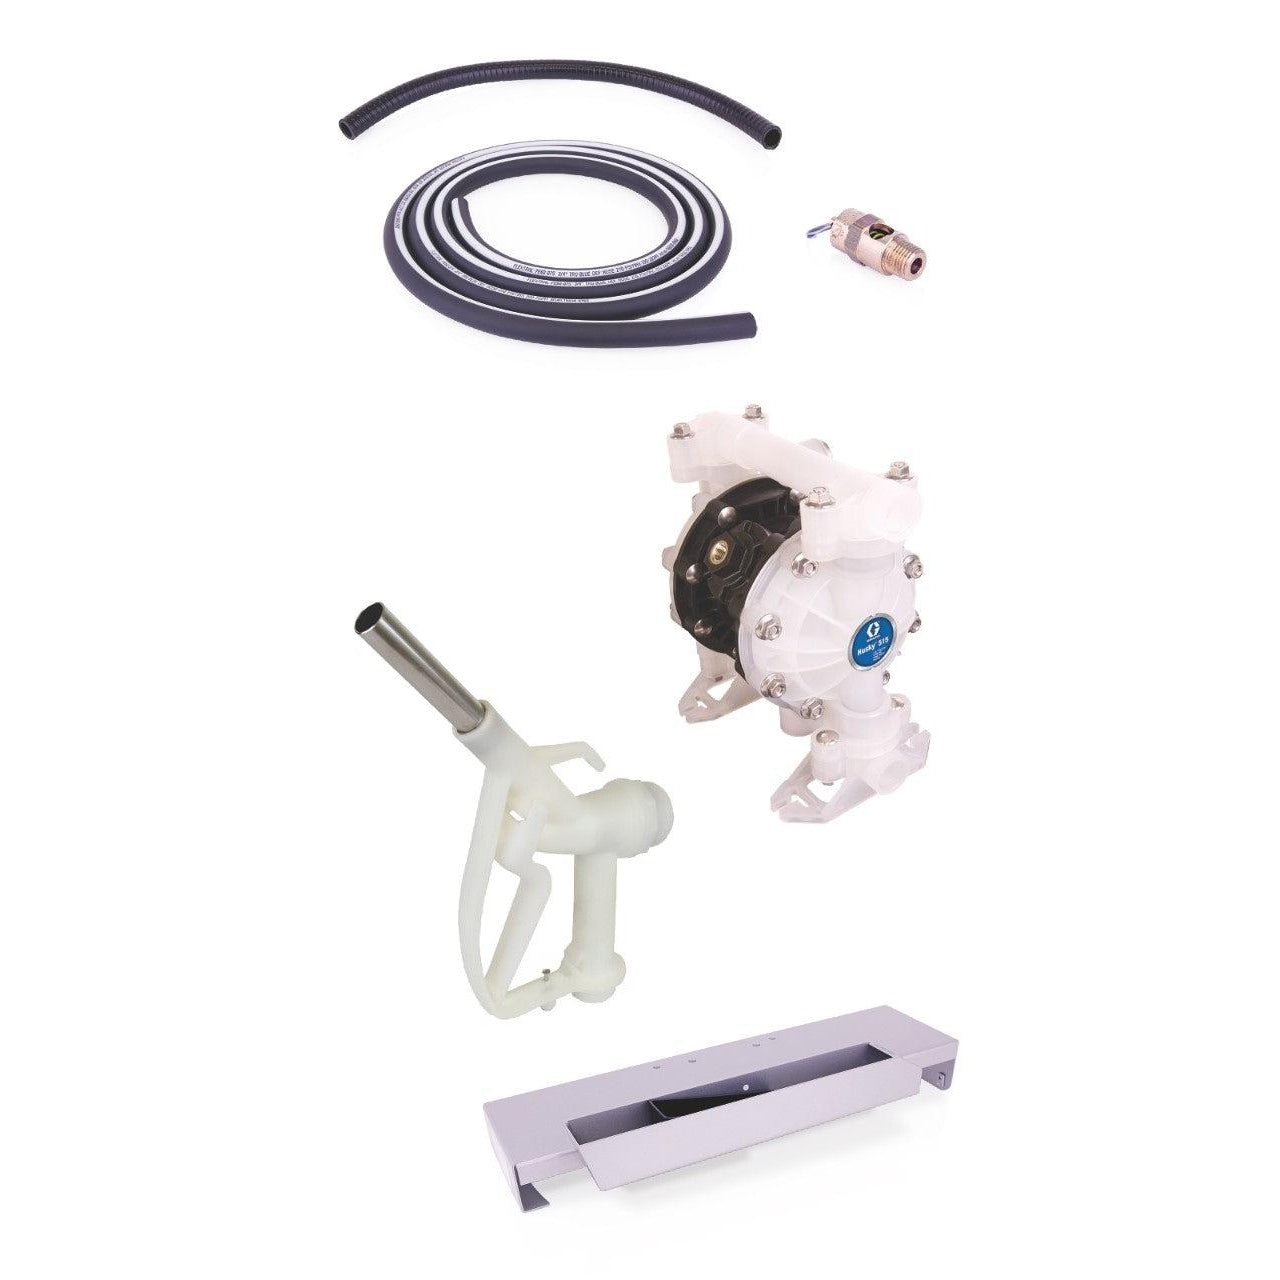 SDª Blue Pump Drum Package - 2 ft (0.61 m) Suction Hose Length - Manual Nozzle - SST Clamp Fittings